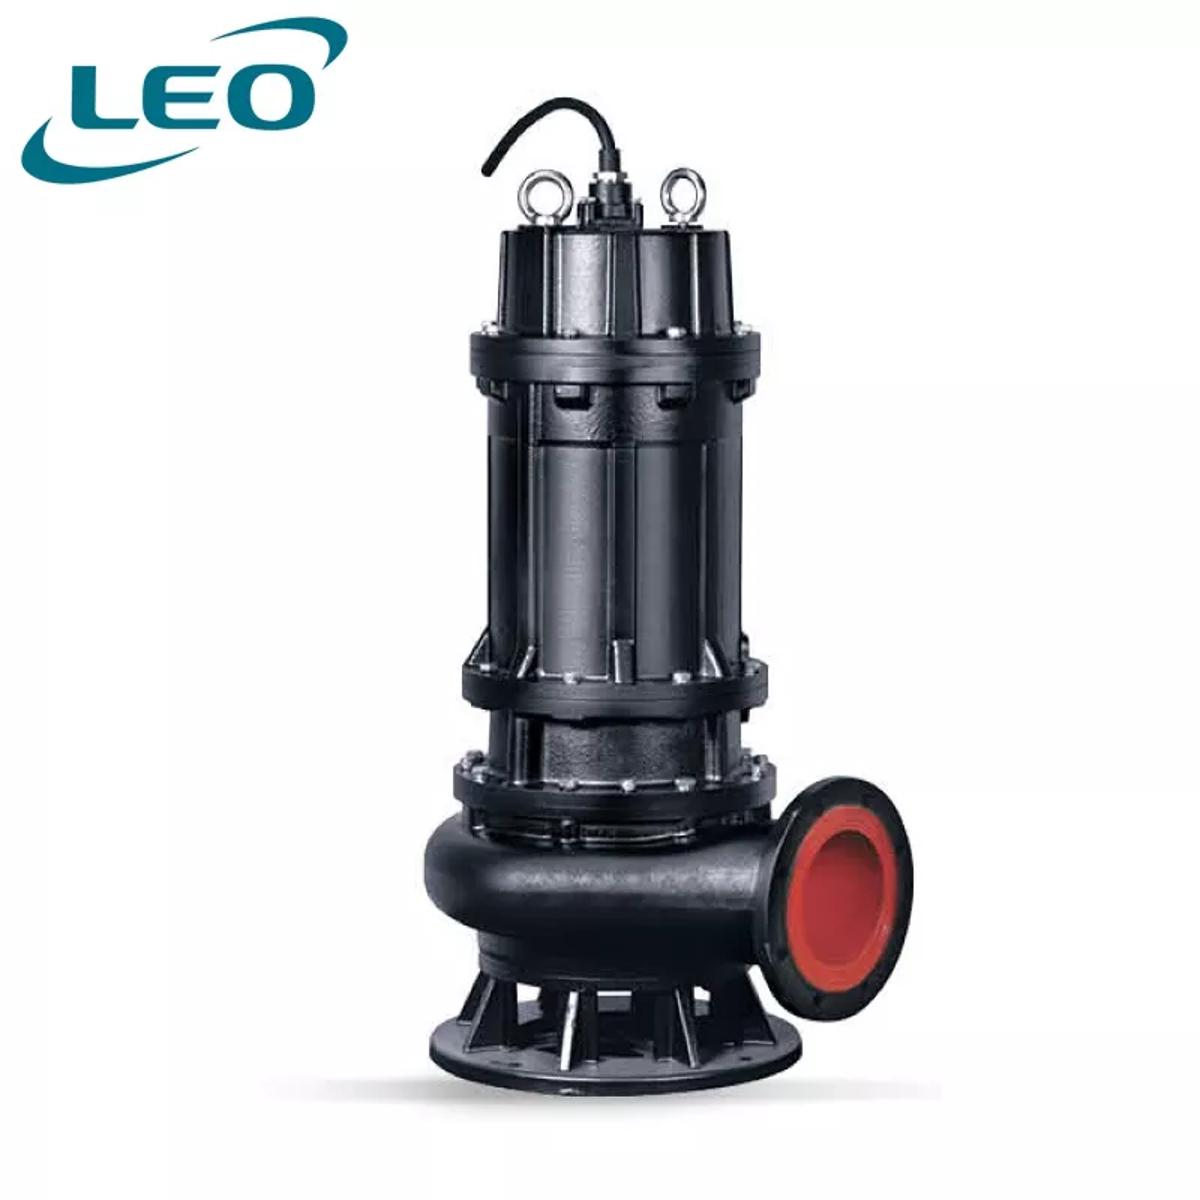 LEO - 50WQ8-16-1.1 - 1100 W - 1.5 HP - Heavy Duty Sewage Submersible Pump  - European STANDARD